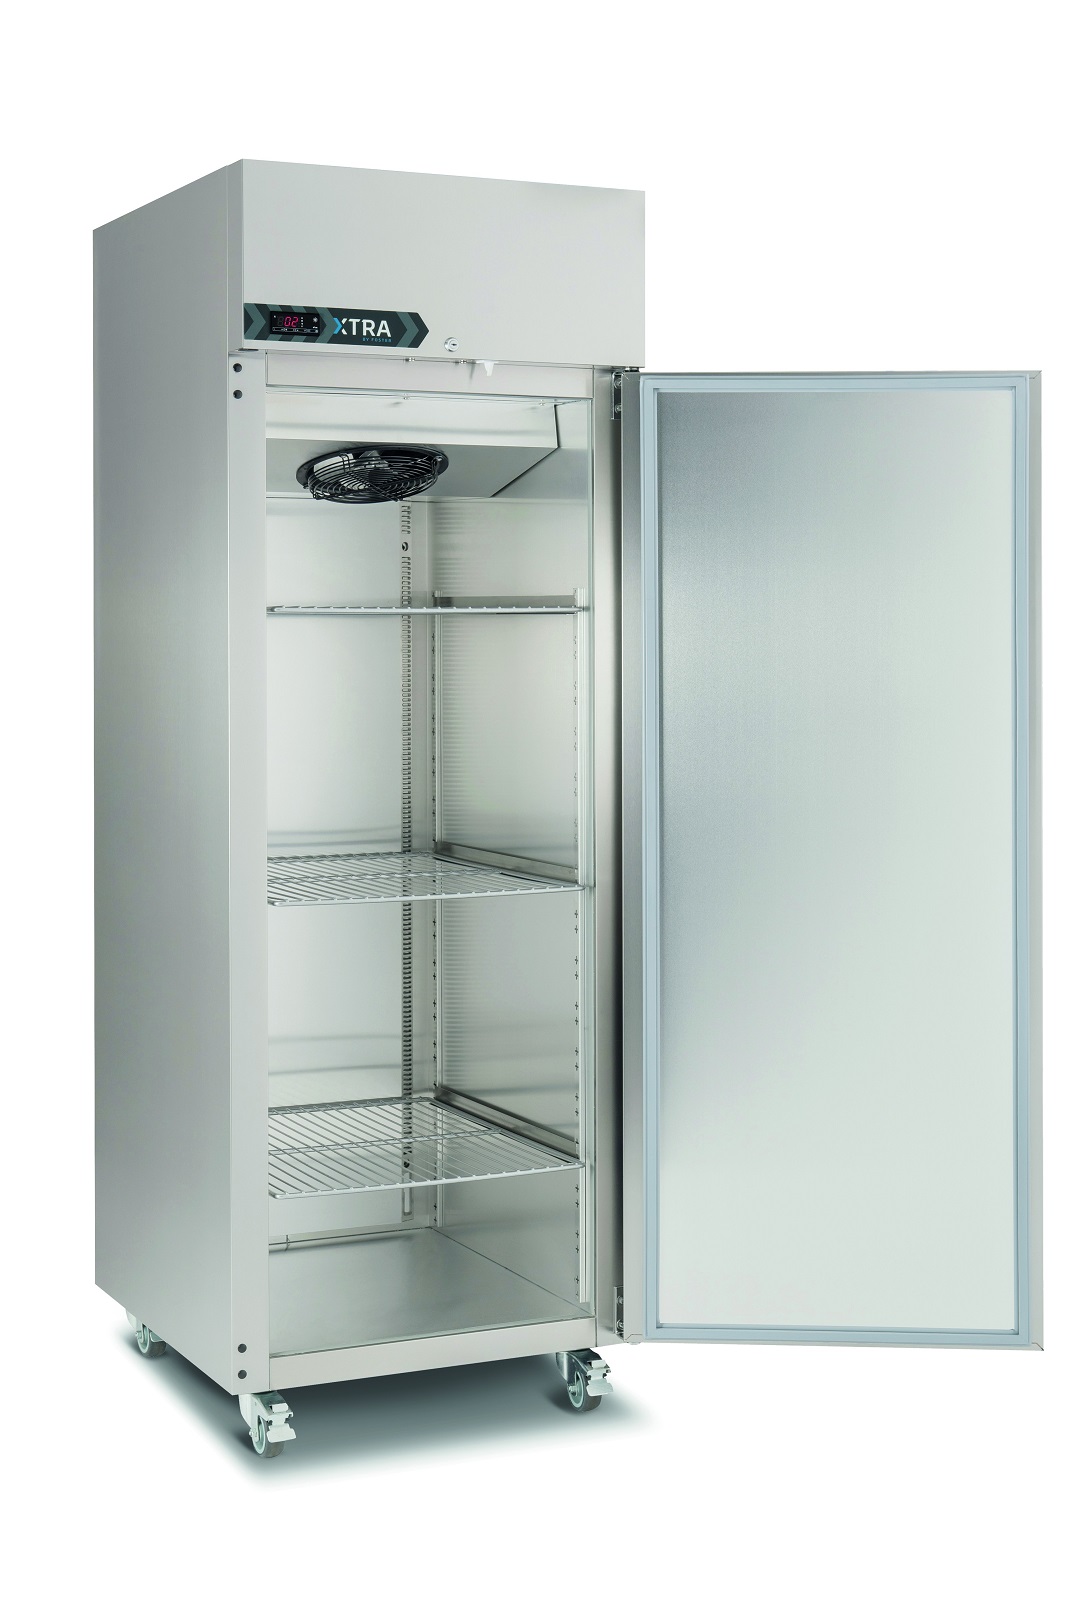 Foster Xtra XR600H Single Door Upright Gastronorm Refrigerator